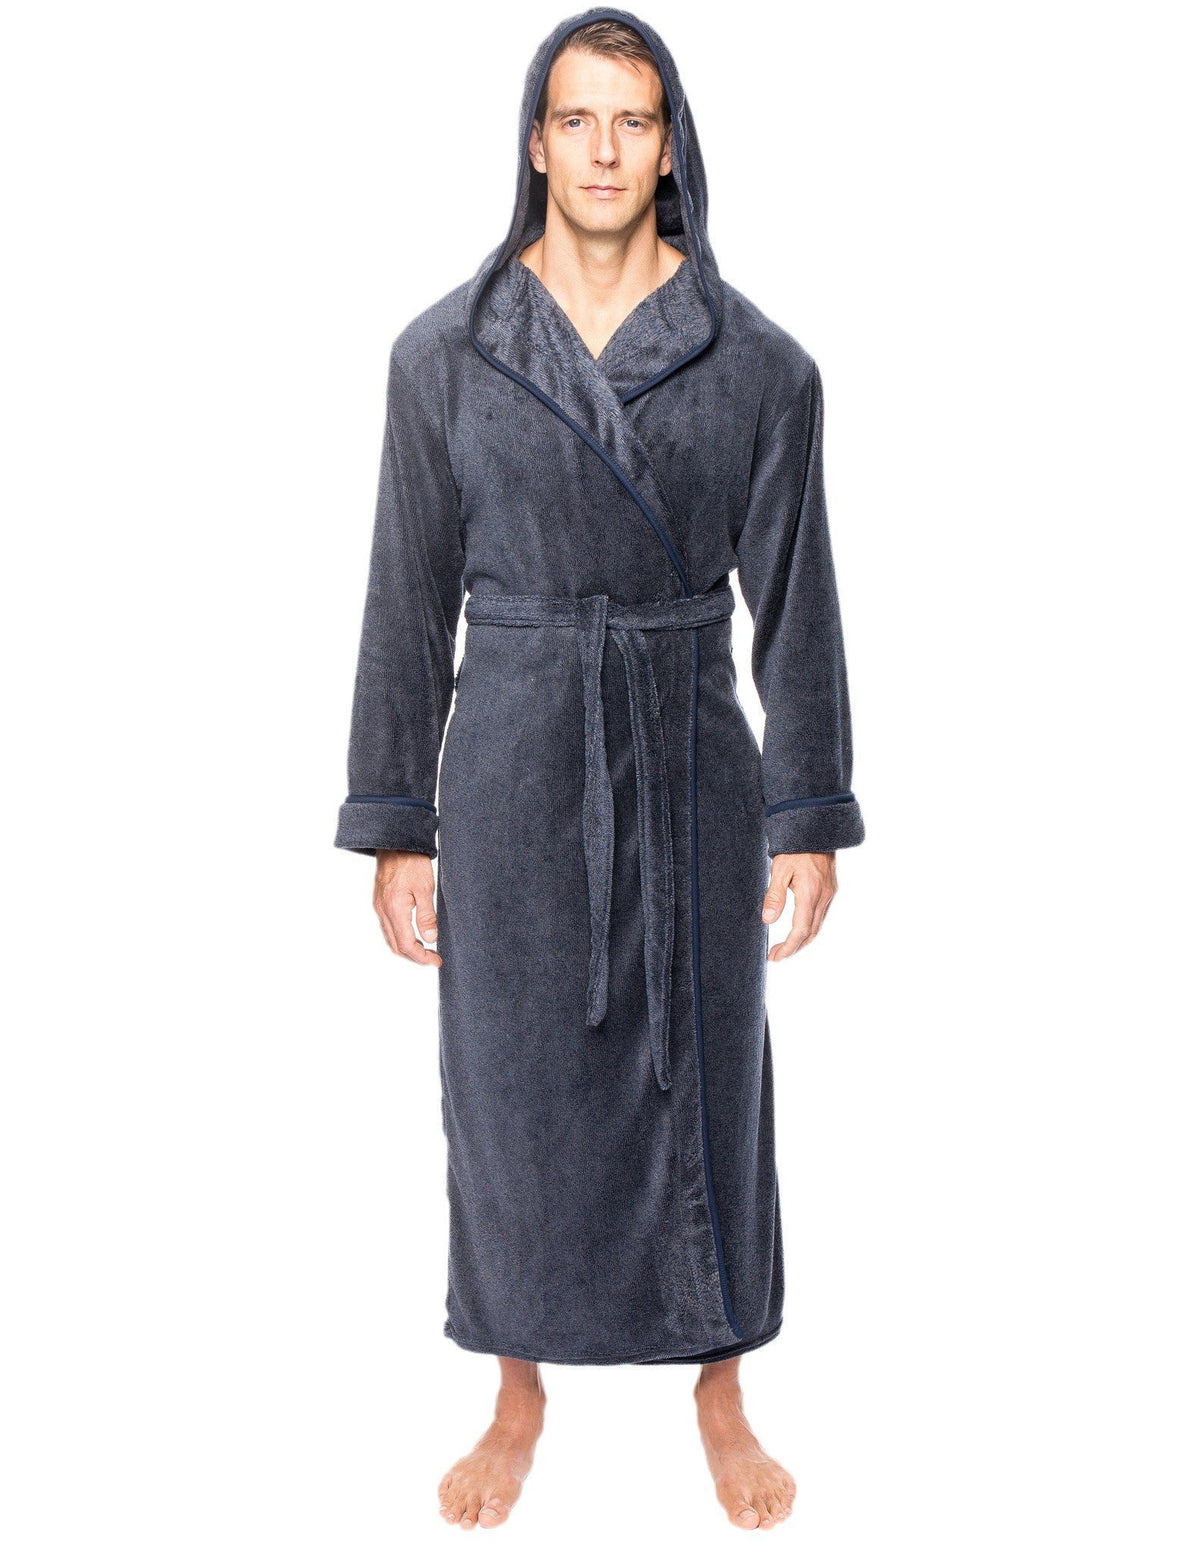 Men's Premium Coral Fleece Long Hooded Plush Spa/Bath Robe - Marl Navy/Grey